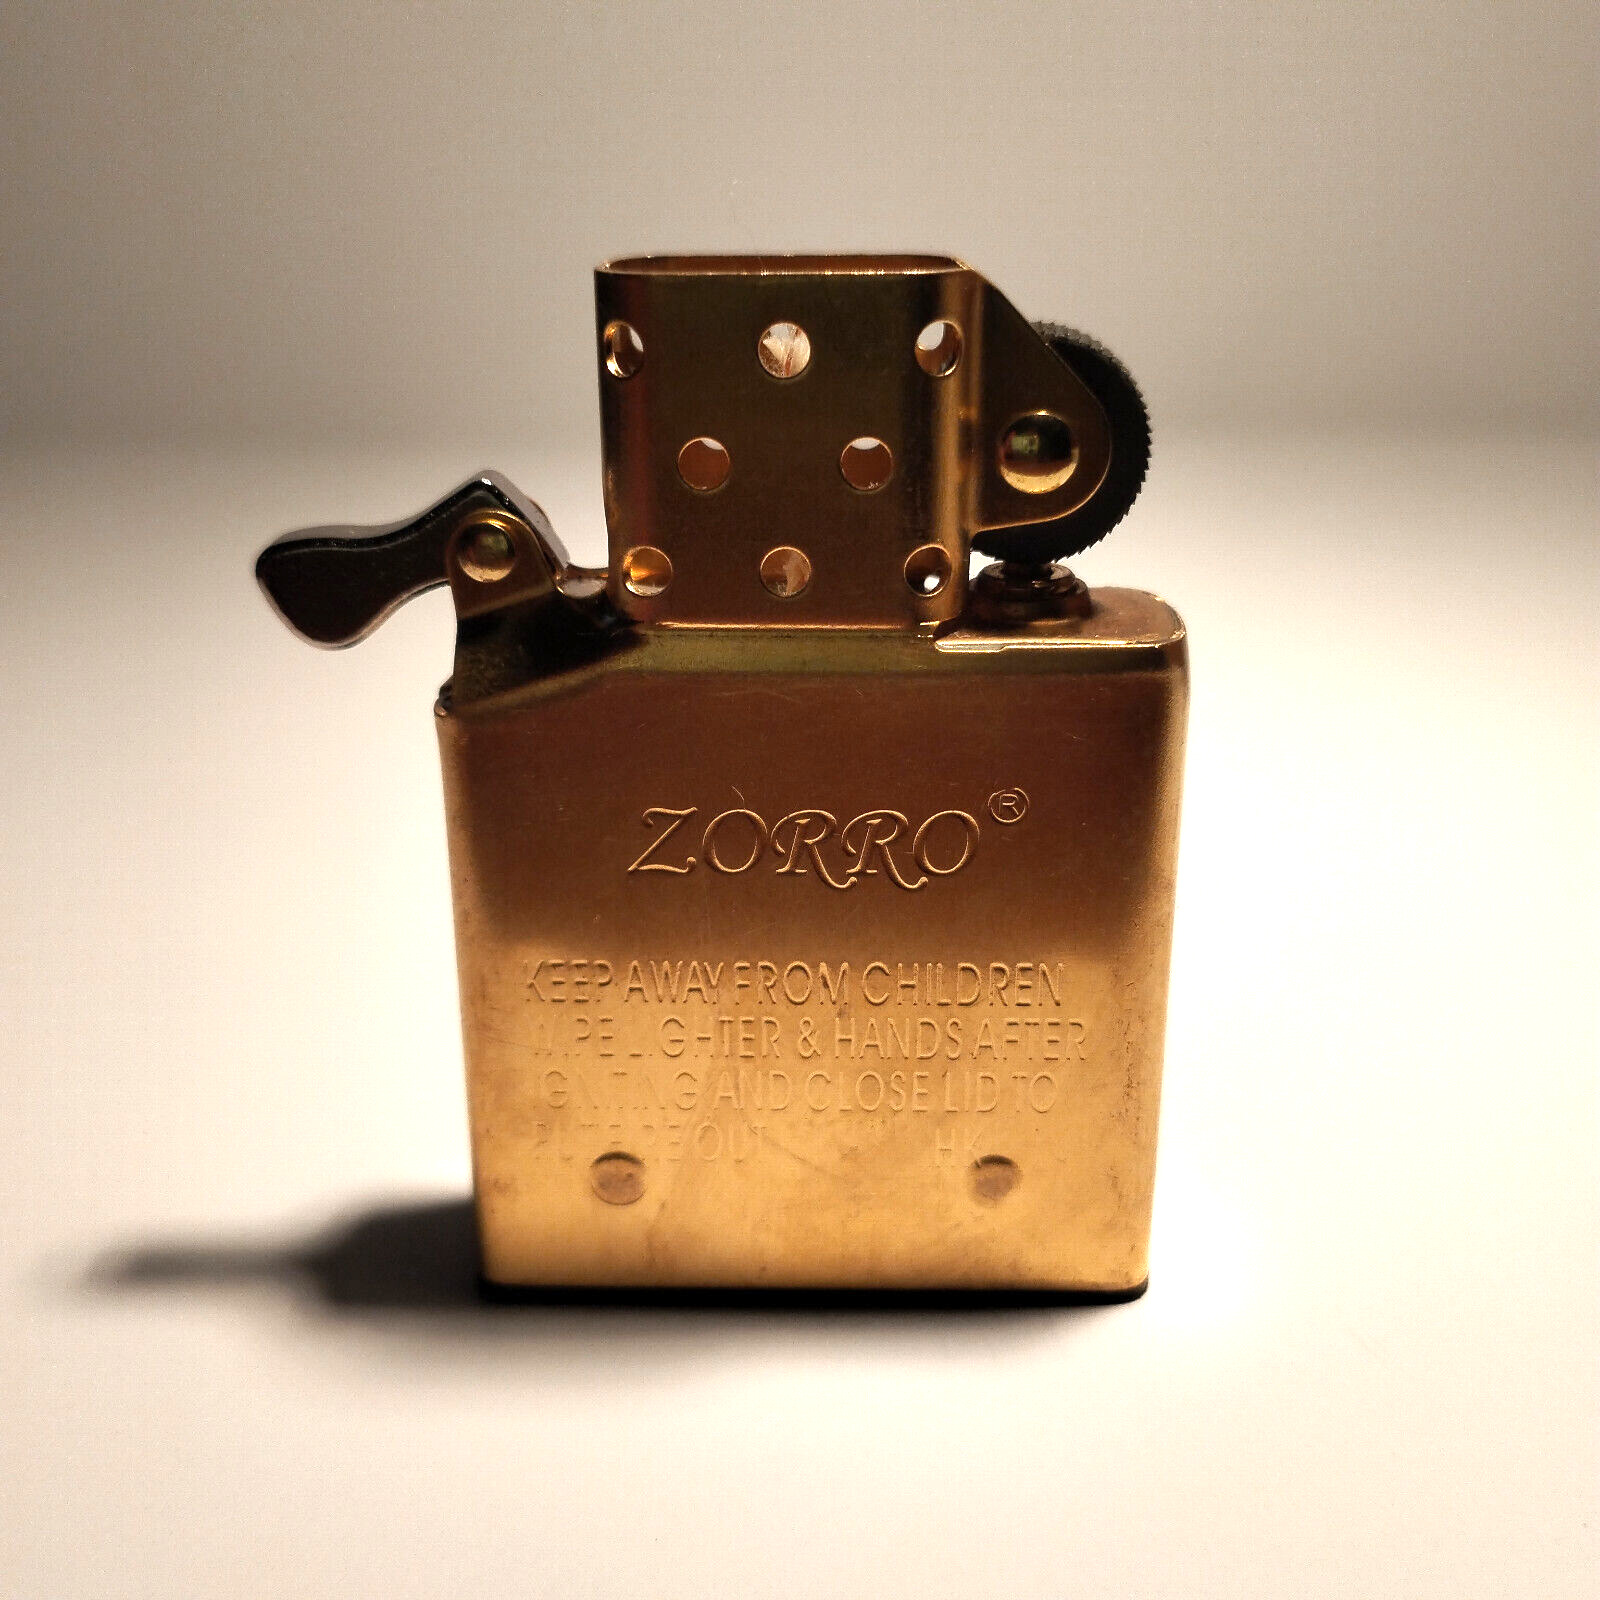 Zorro Brass Petrol Lighter Insert with Bottom Rubber Gasket, Fits: Zippo